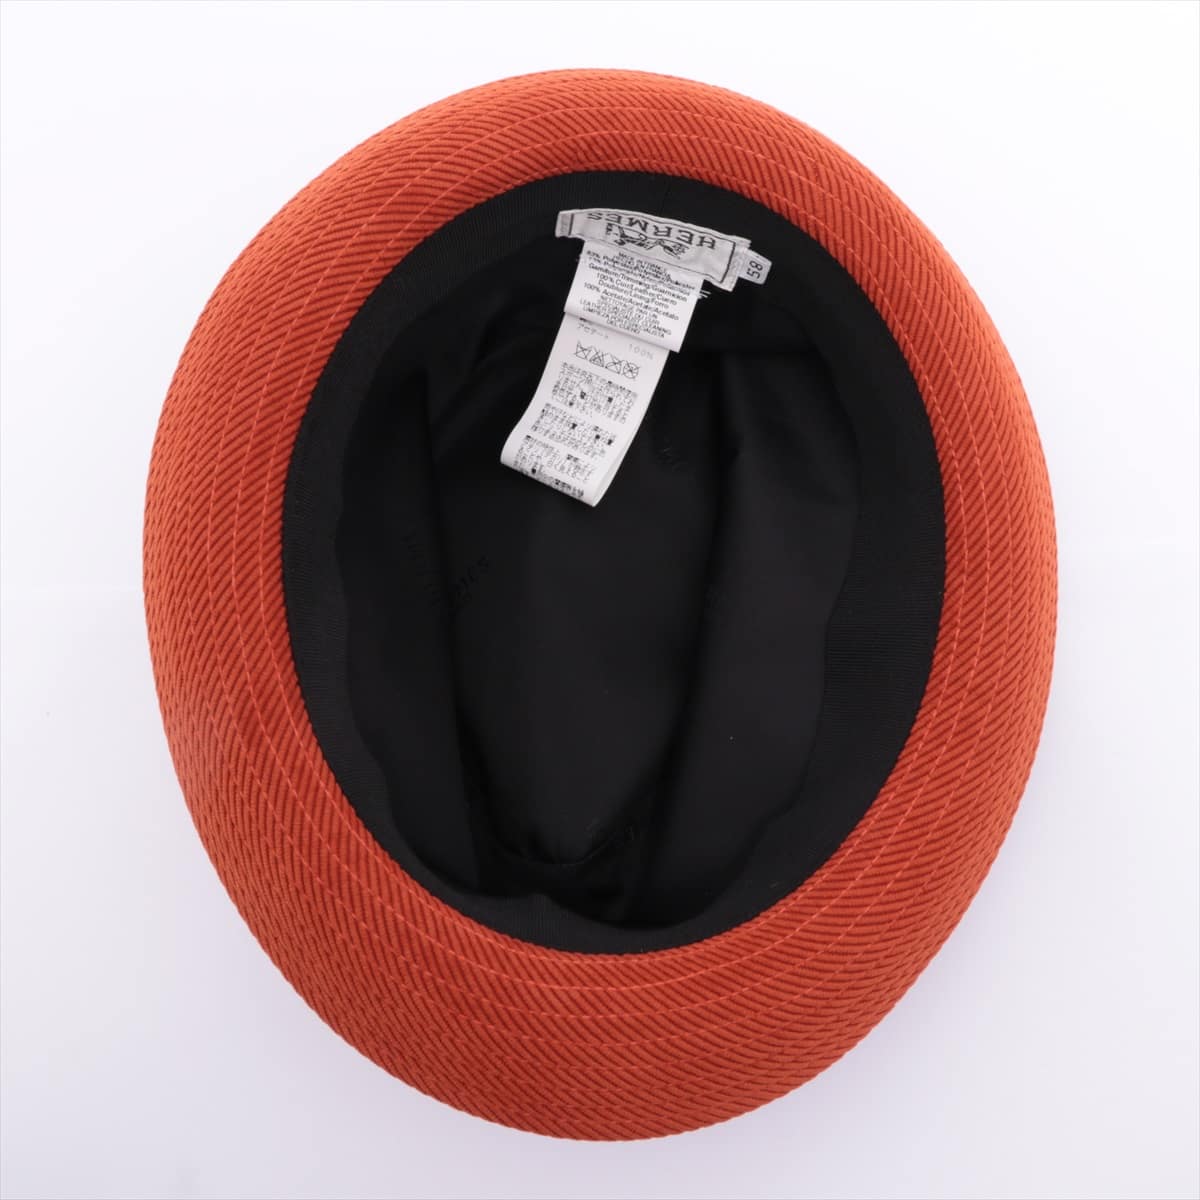 Hermès Hat Polyester & nylon Orange